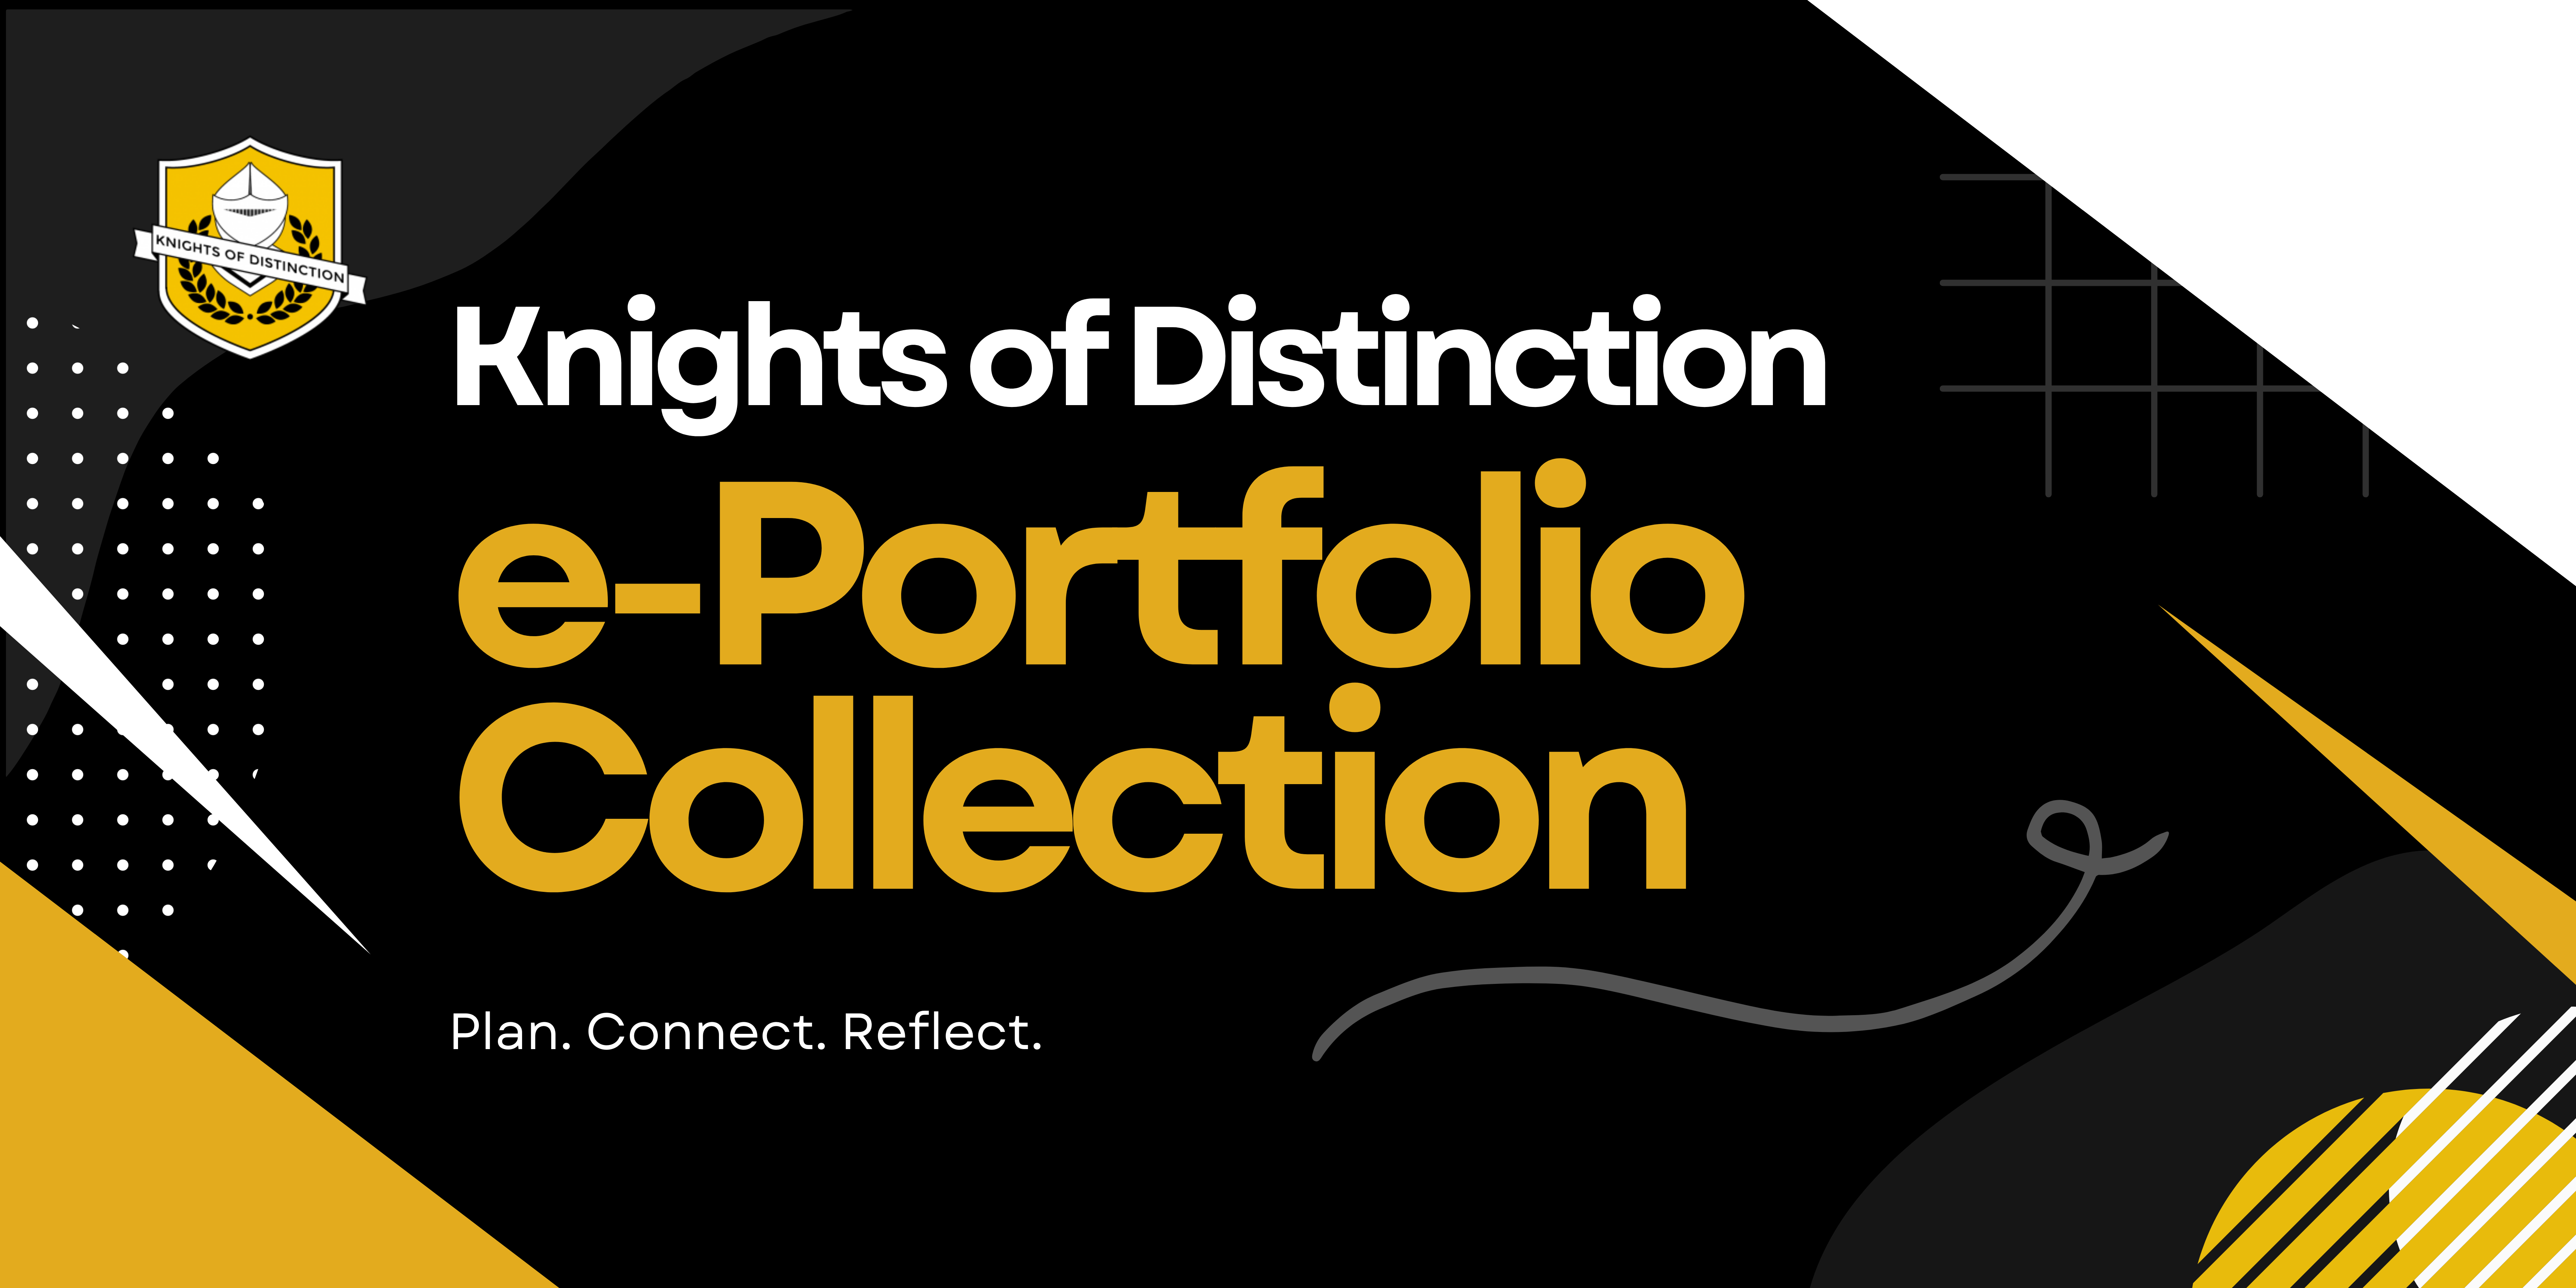 Knights of Distinction e-Portfolios